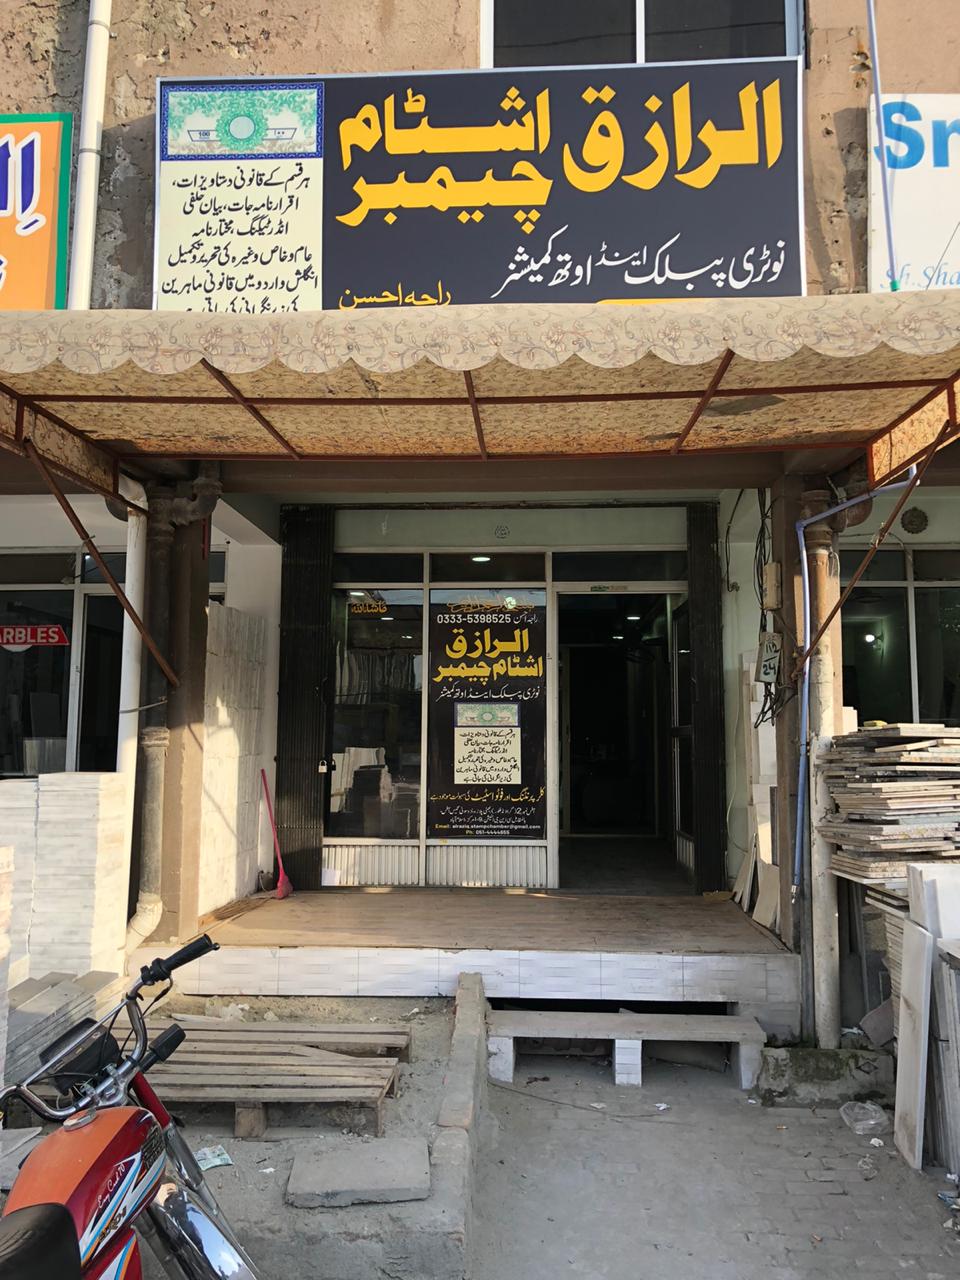 Al Raziq Stamp Chamber (Stamp Vendor, Stamp Shop, Legal Stamp Paper, Legal Documentation, Notary Public & Oath Commissioner, Stamp Farosh) Notry Public